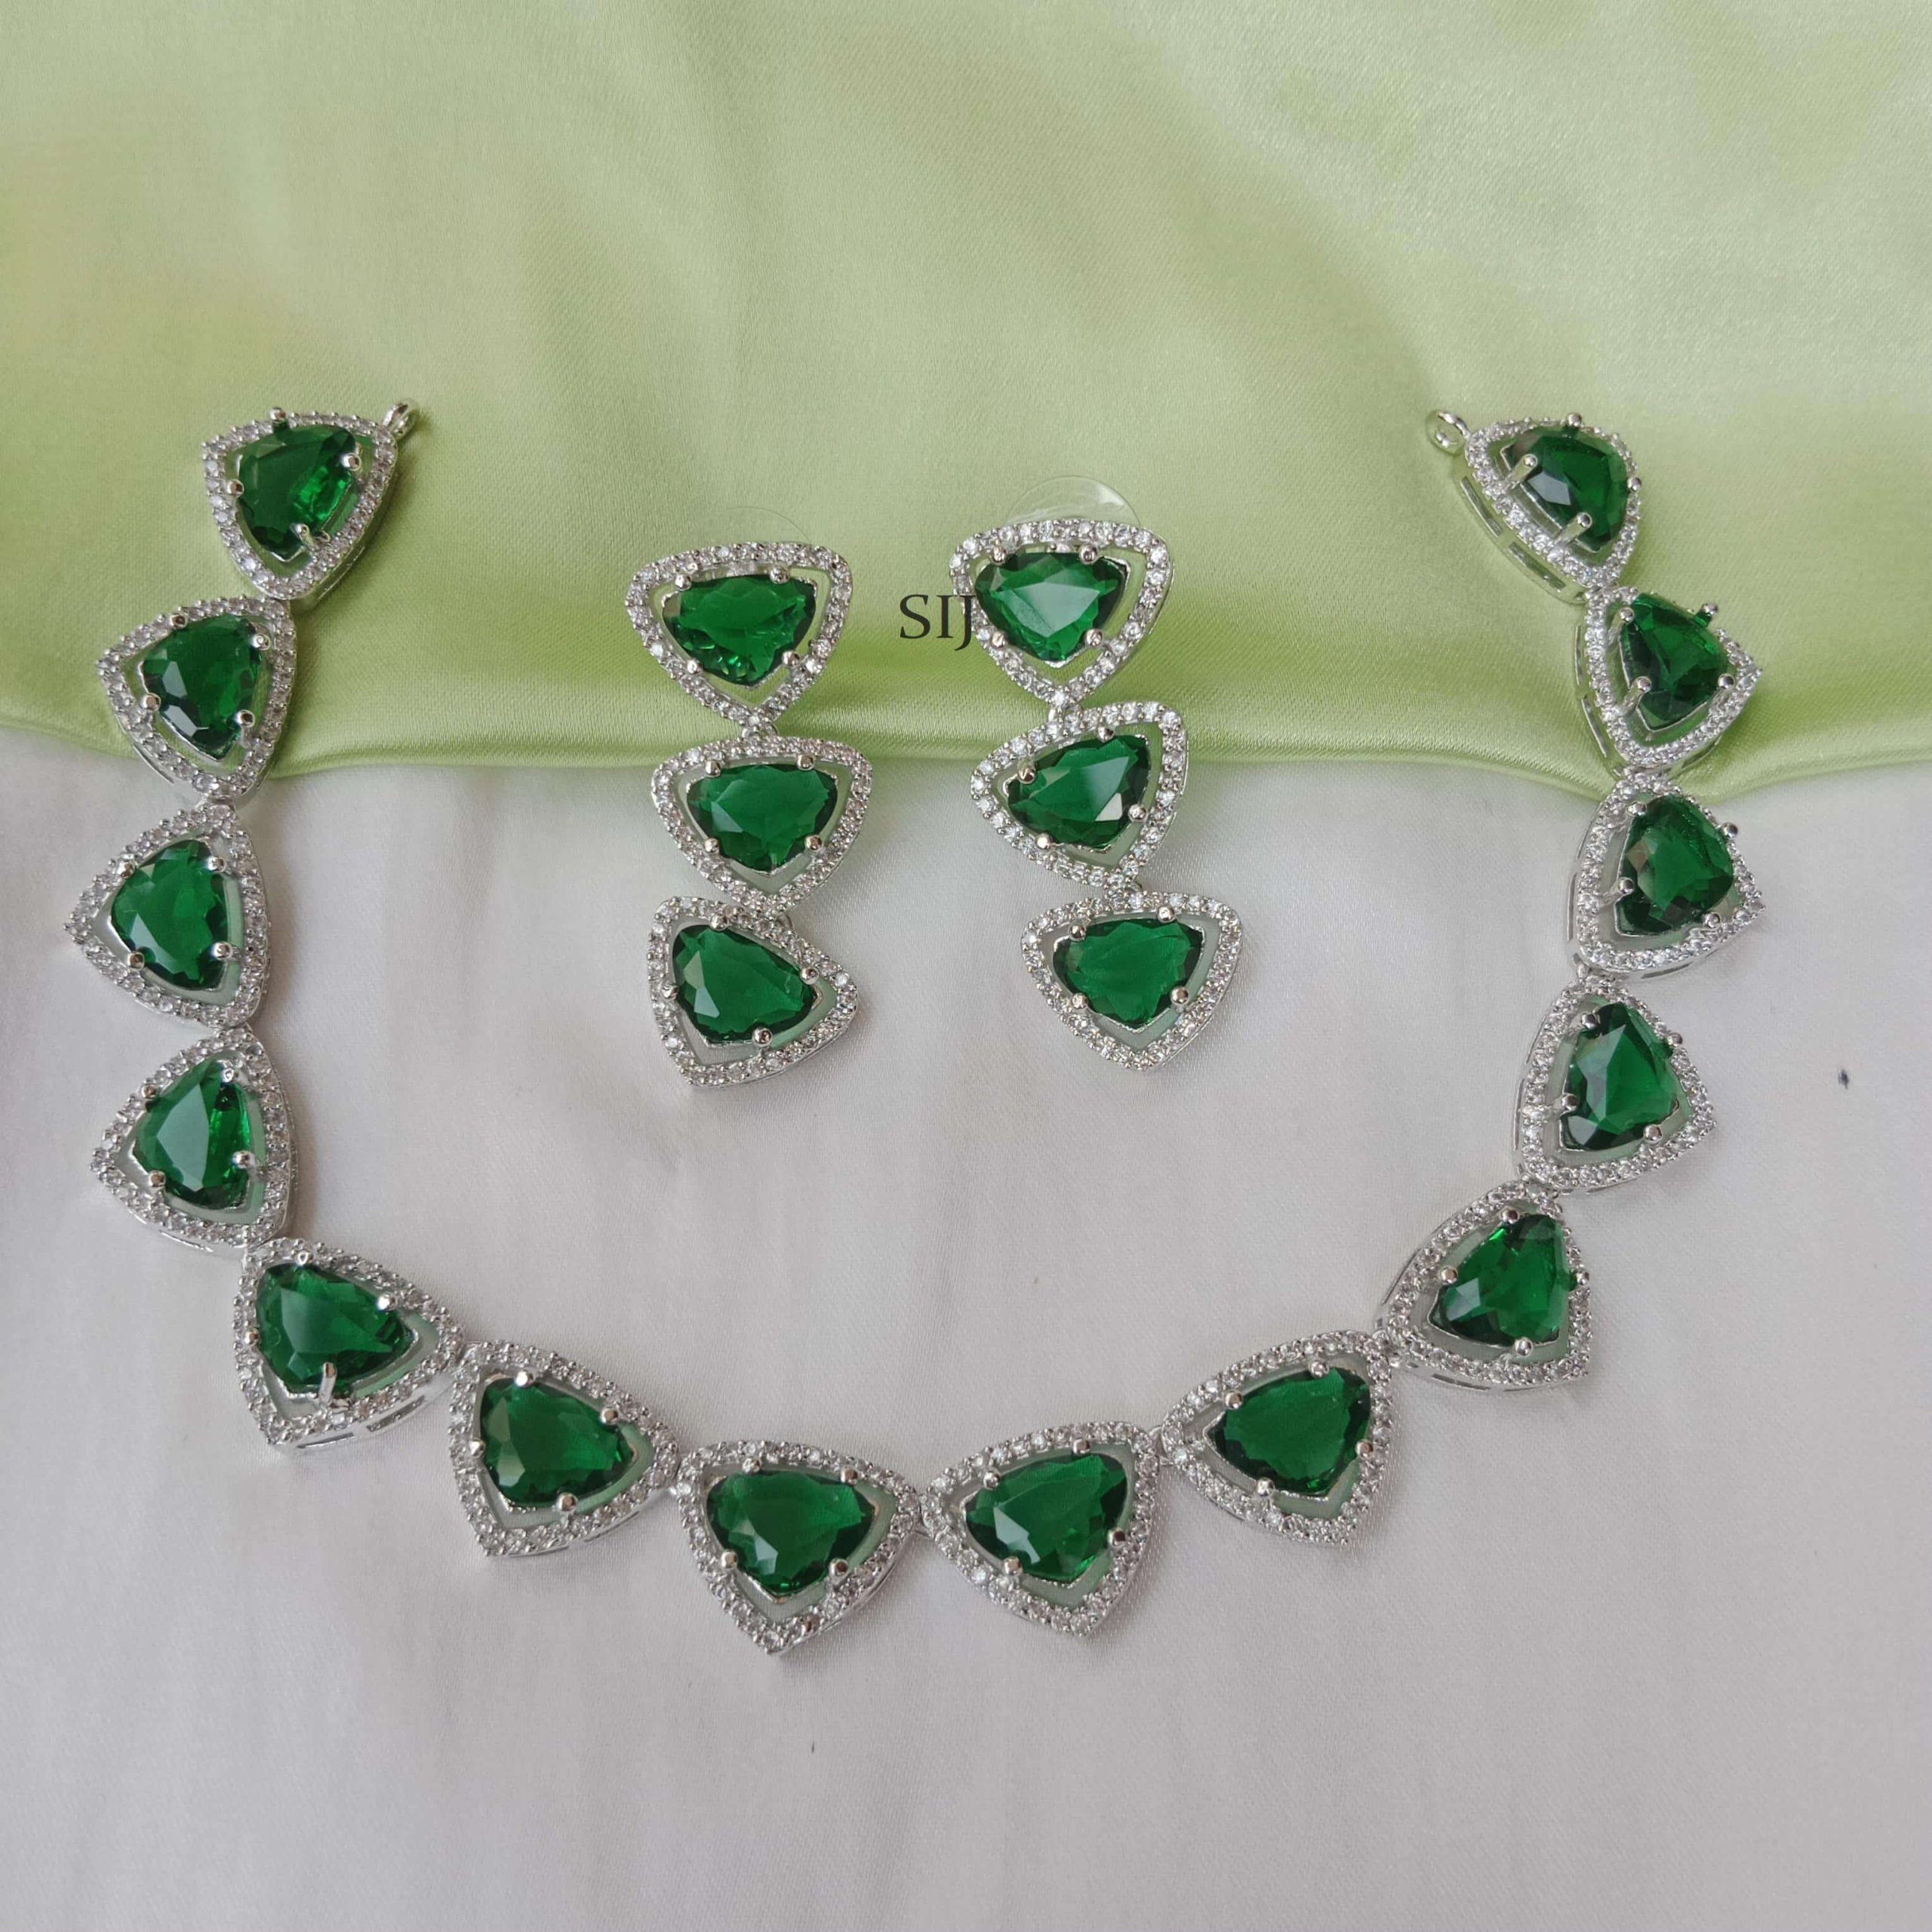 Attractive Triangle Design Green Stones Necklace-3